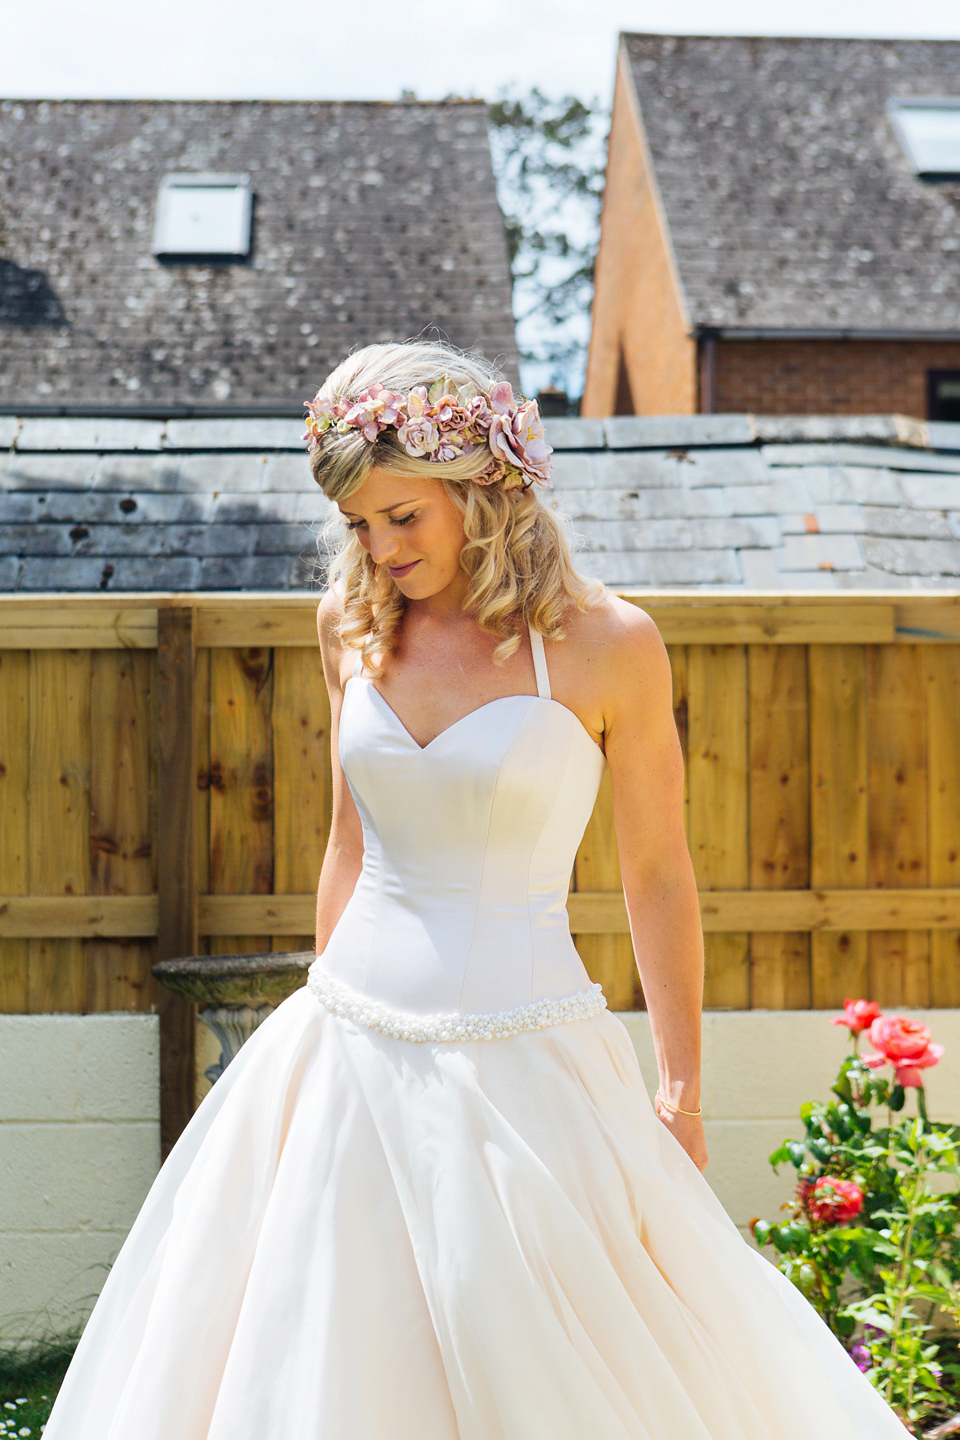 Lyn Ashworth by Sarah Barrett for a Pastel Colour Summer Garden Wedding. Photography by Katy & Co.